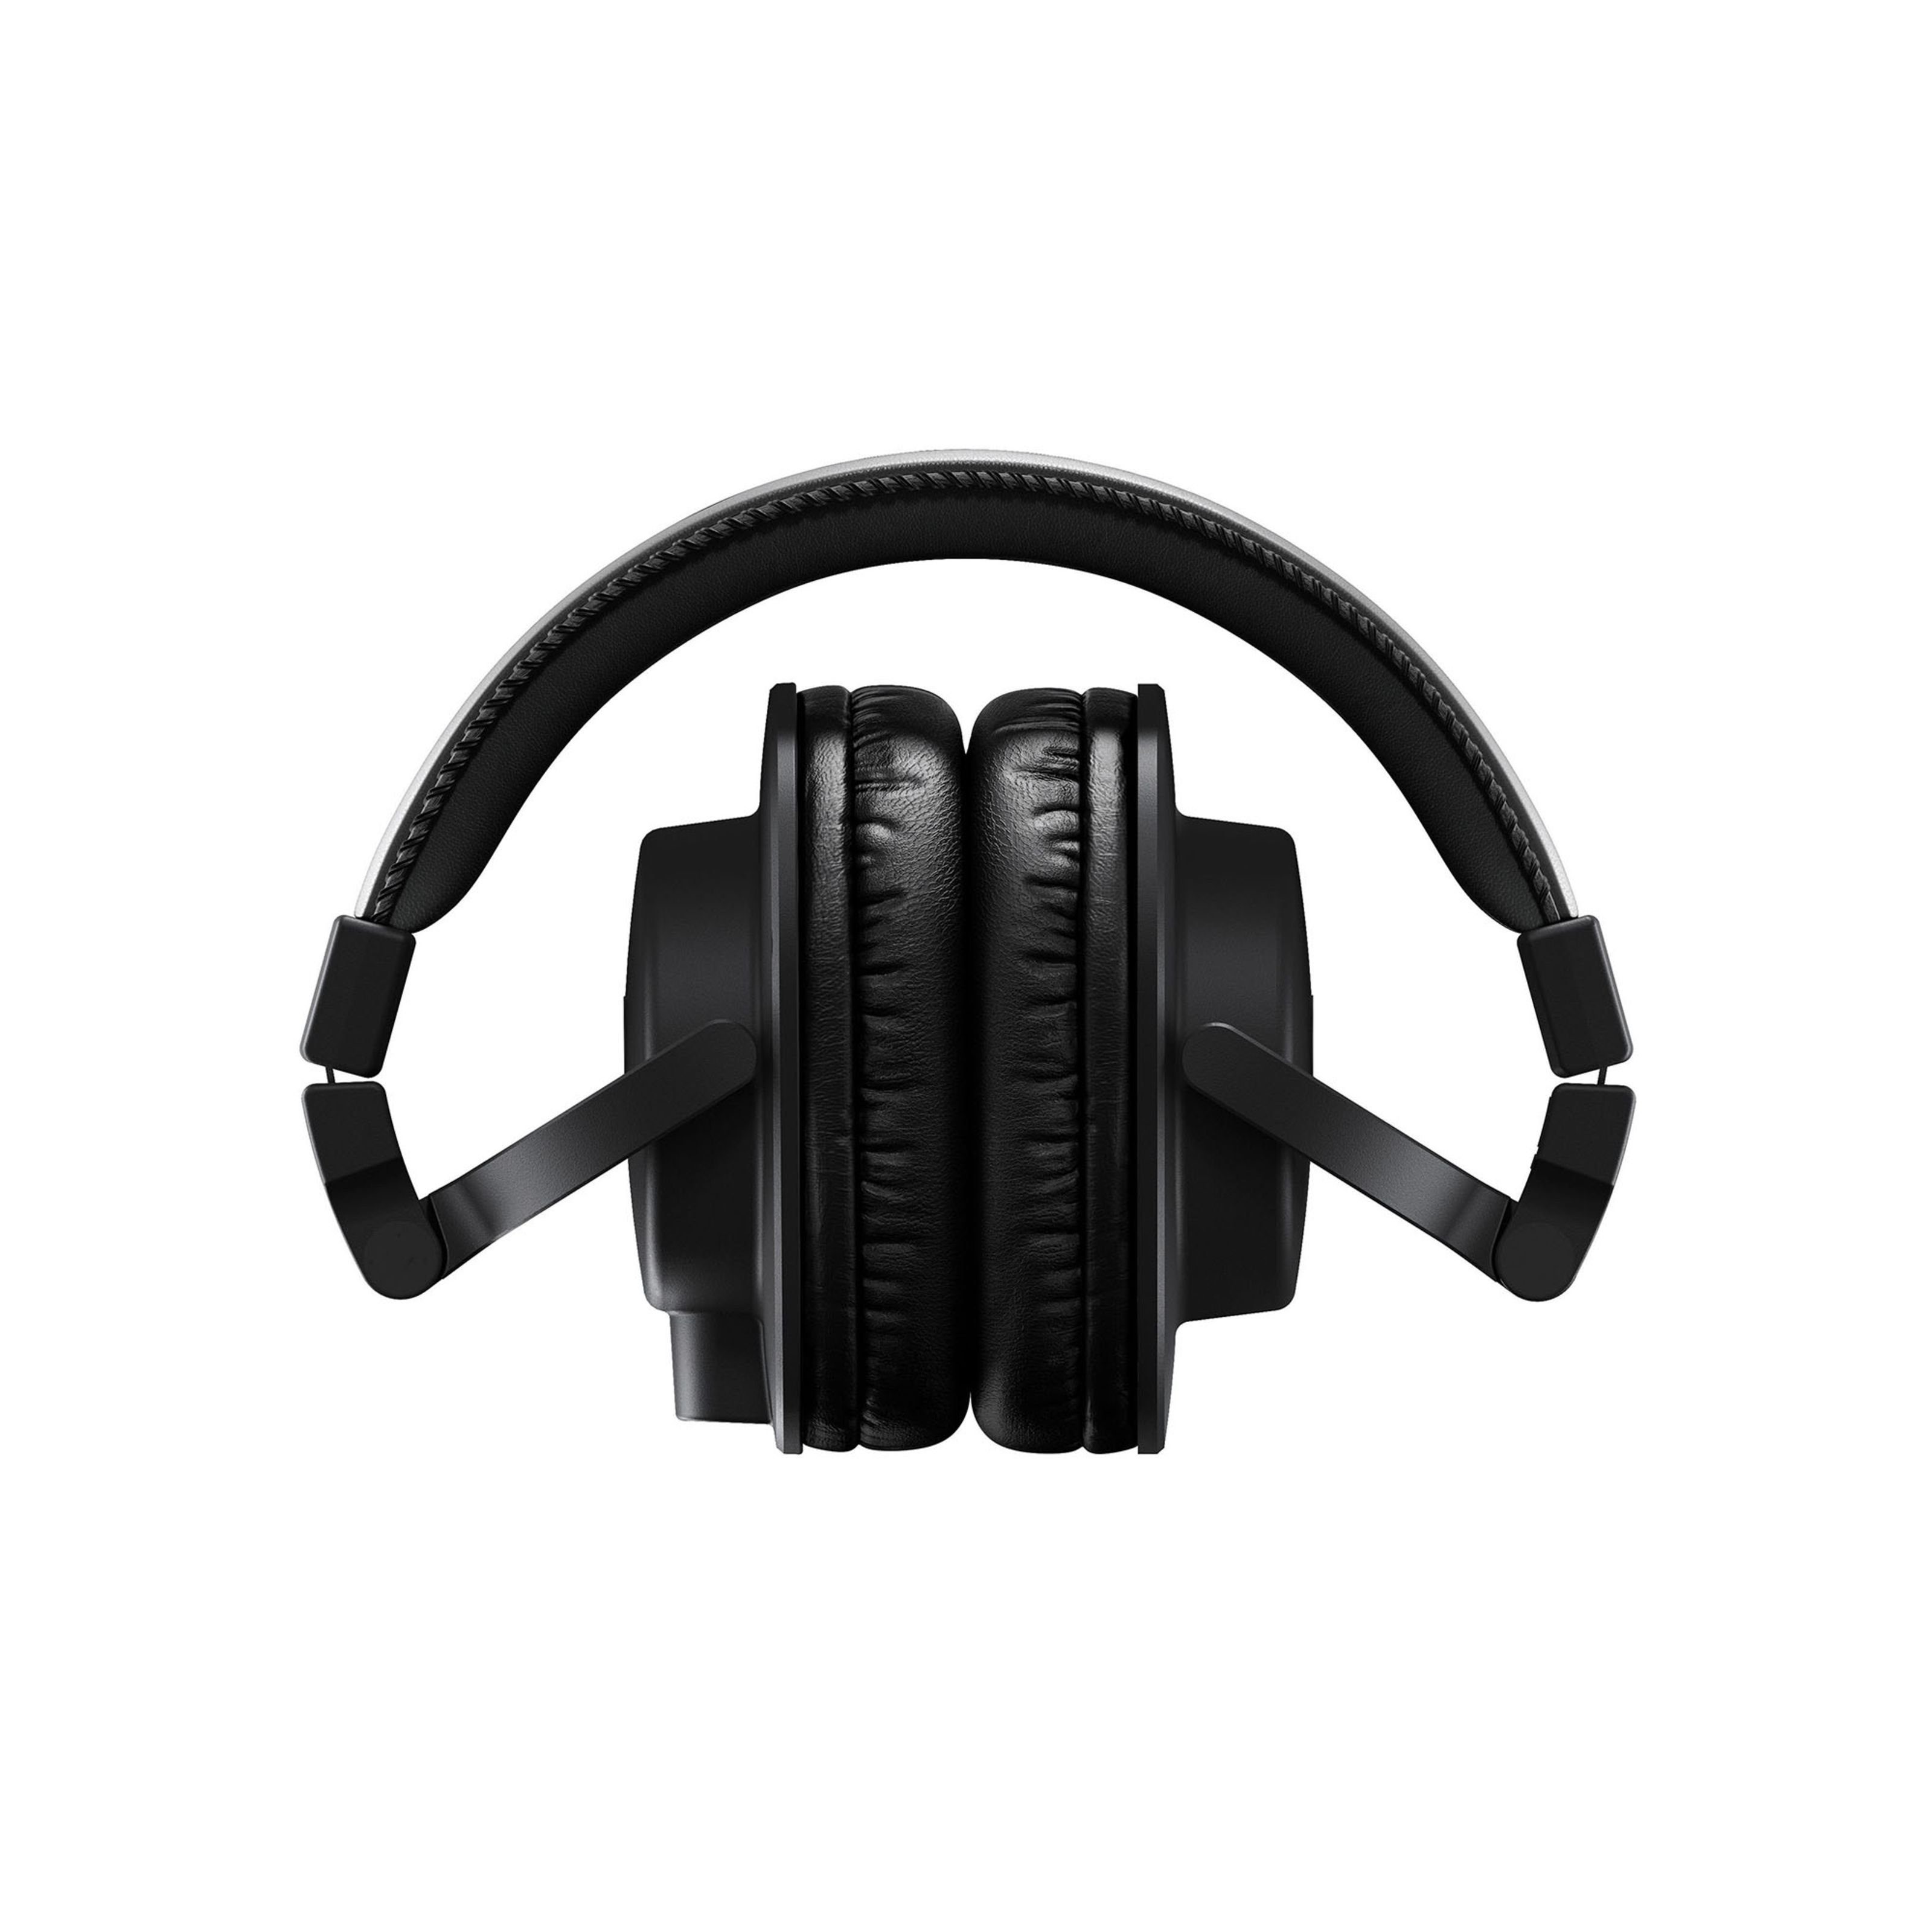 Yamaha Over-Ear-Kopfhörer (HPH-MT5)